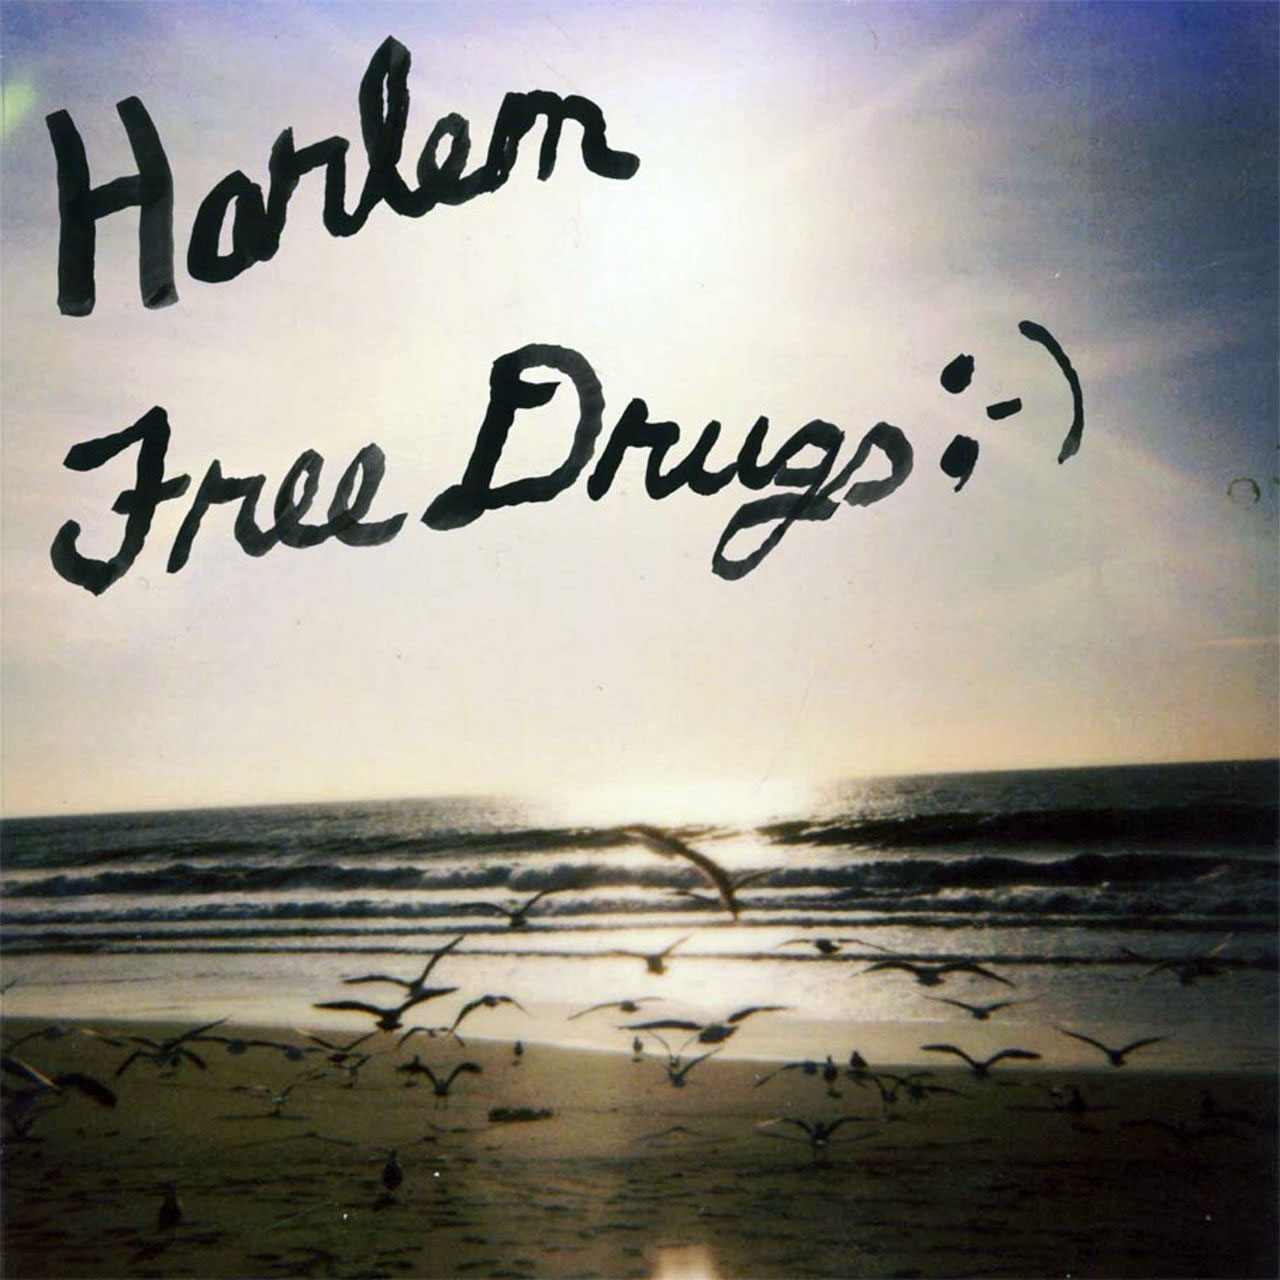 harlem free drugs